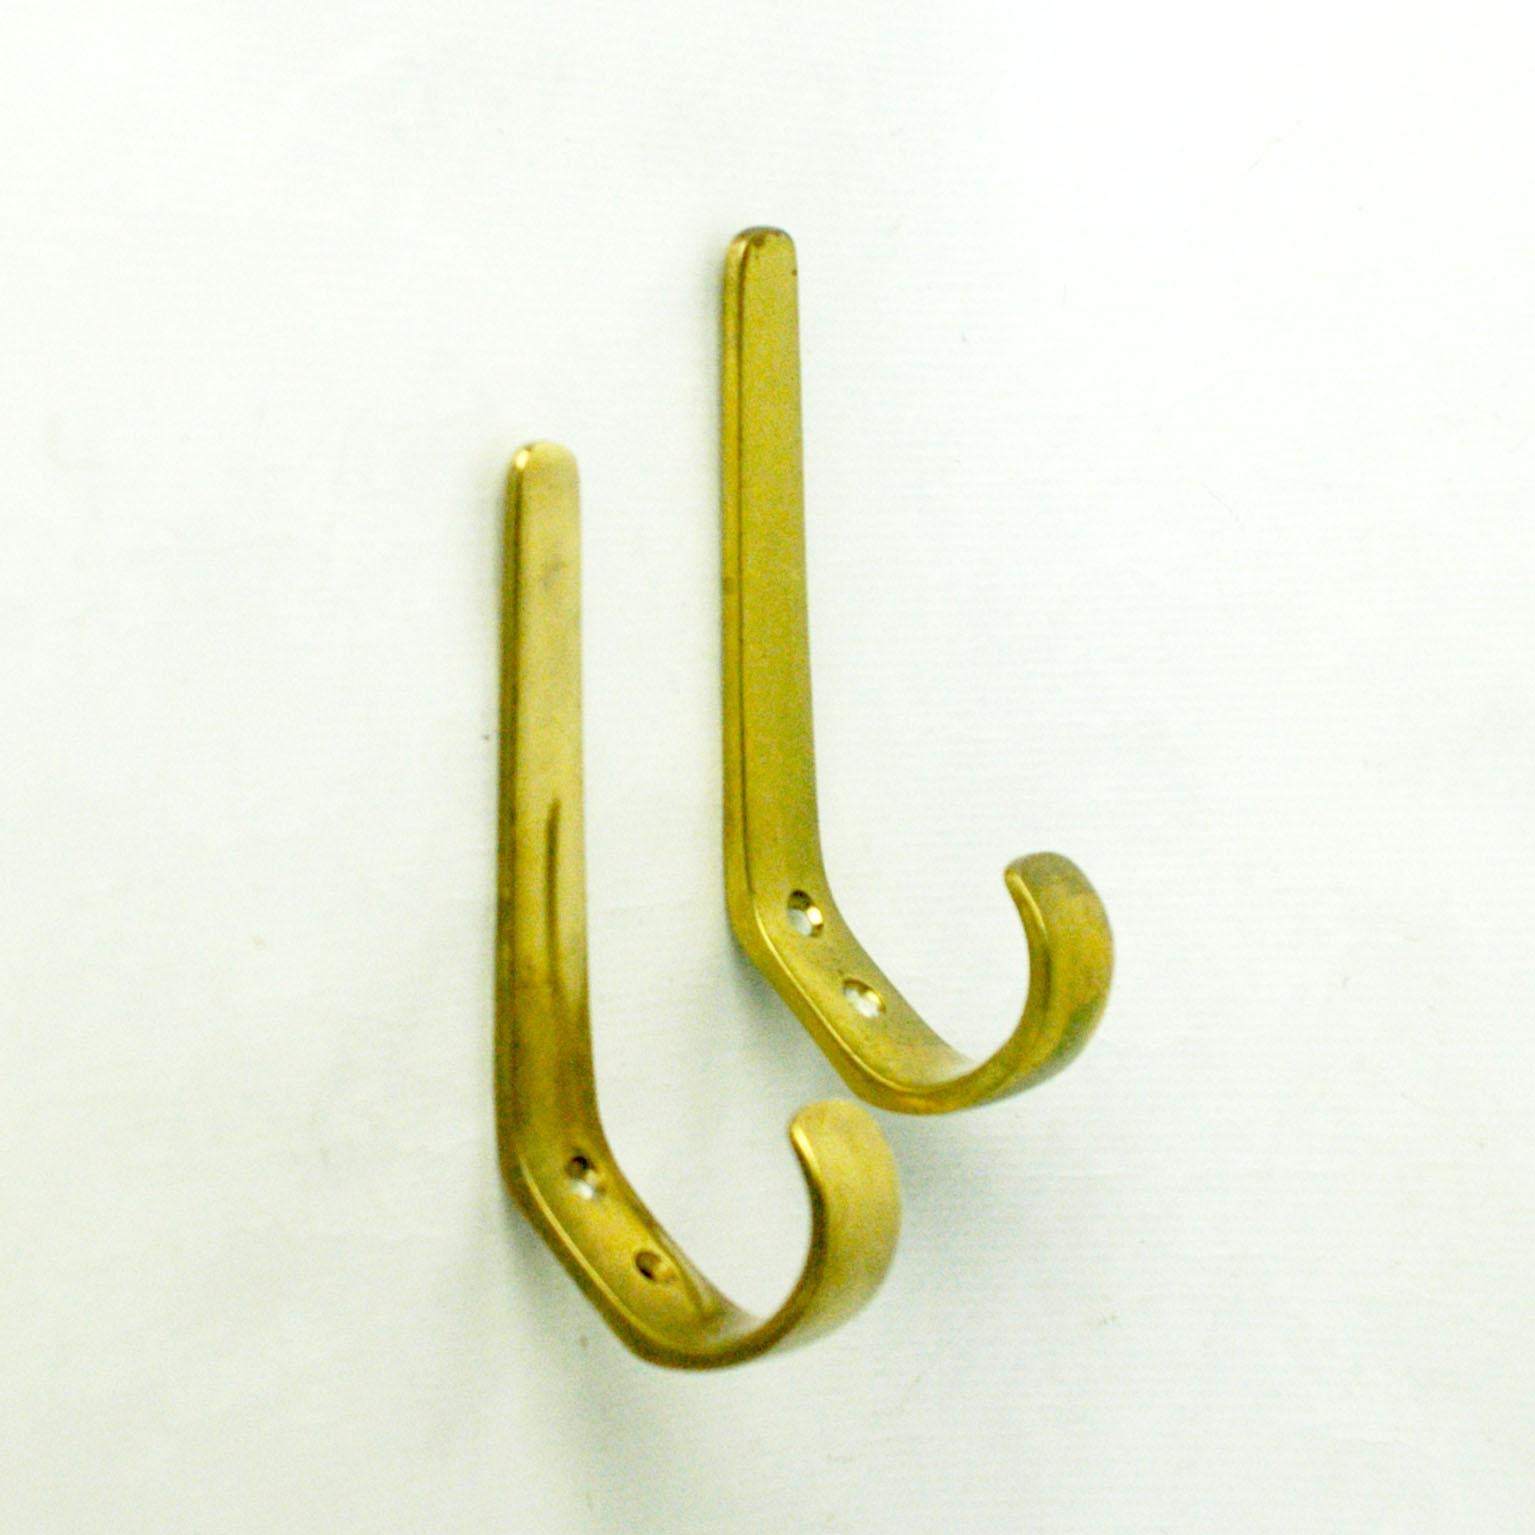 Beautiful pure and iconic designed brass hooks